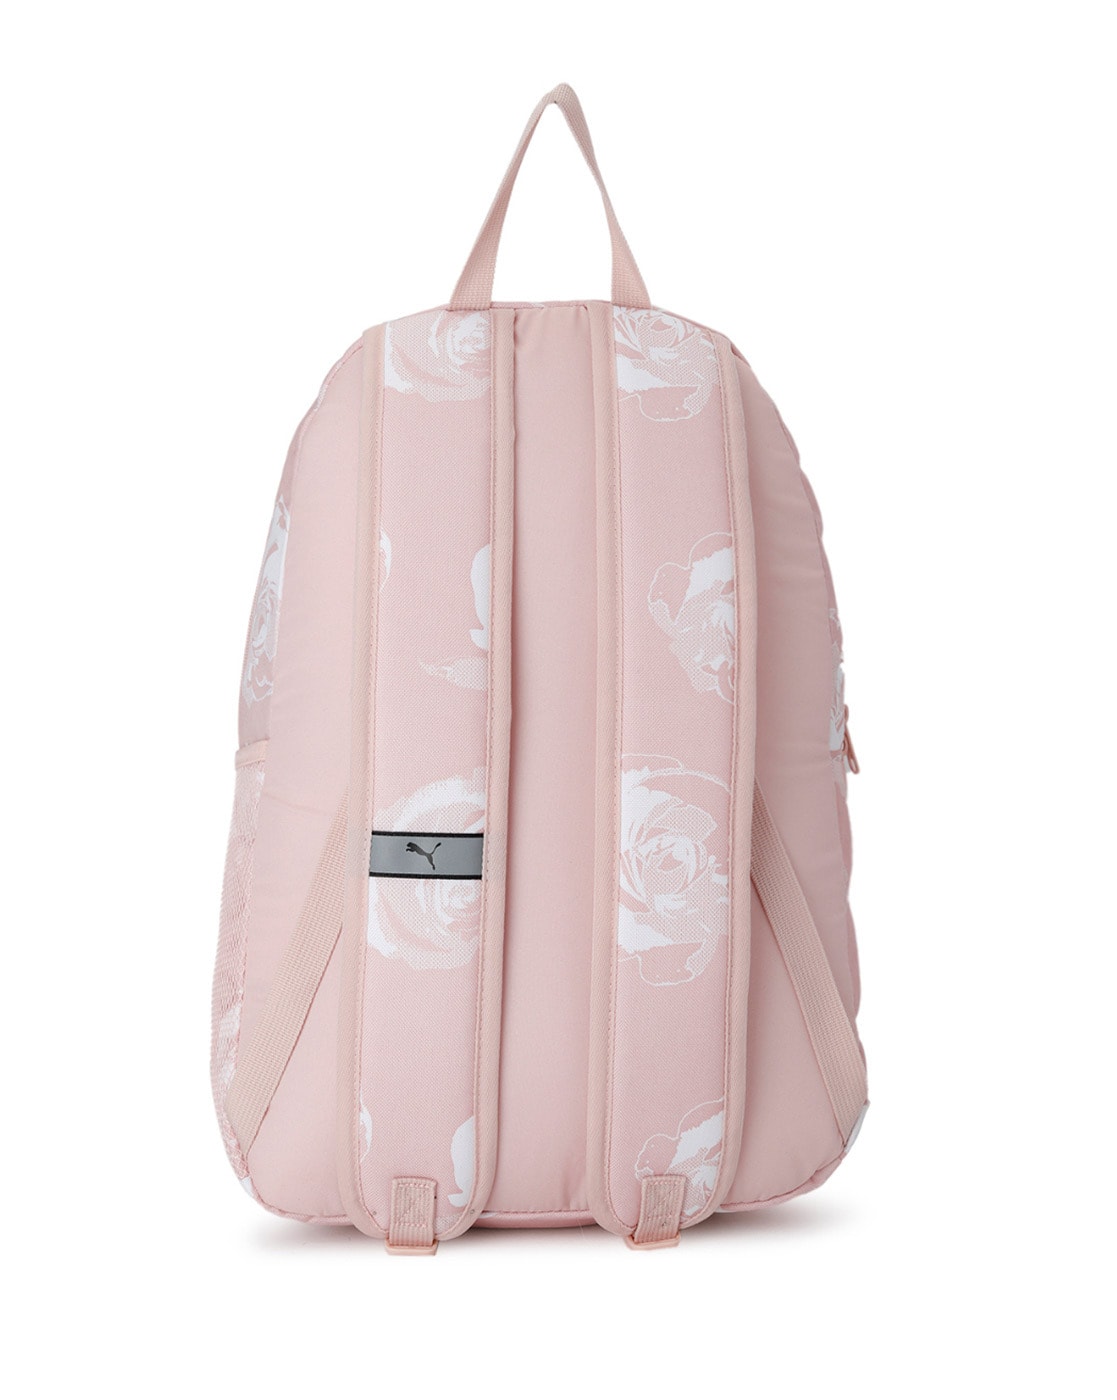 PUMA Synthetic Classic Backpack Rucksack Bridal Rosa in Pink Womens Mens Bags Mens Backpacks 